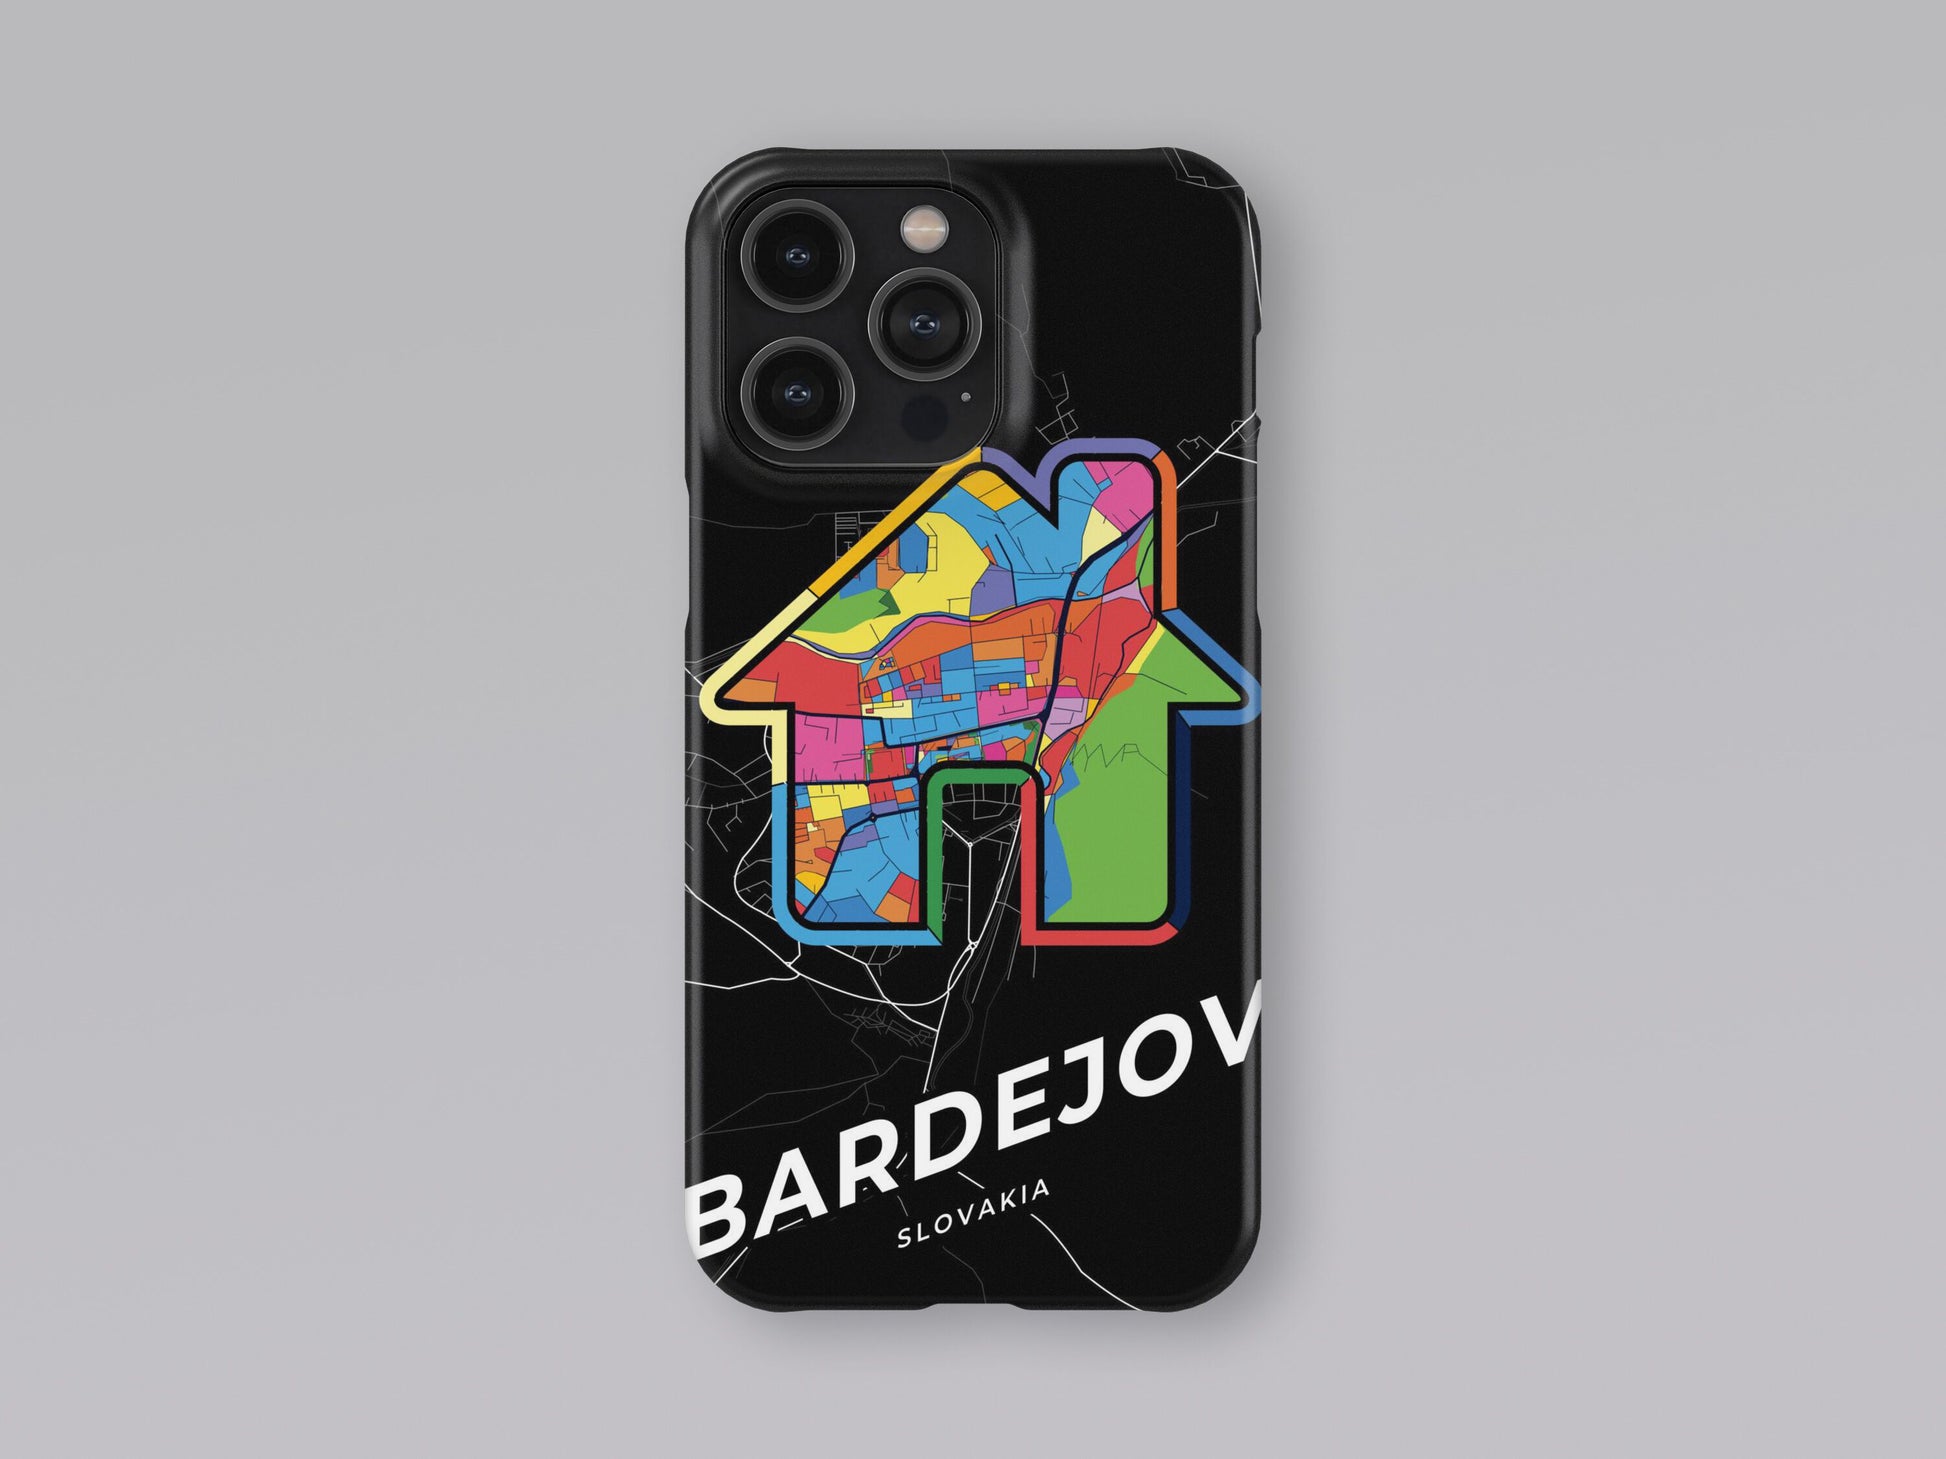 Bardejov Slovakia slim phone case with colorful icon. Birthday, wedding or housewarming gift. Couple match cases. 3